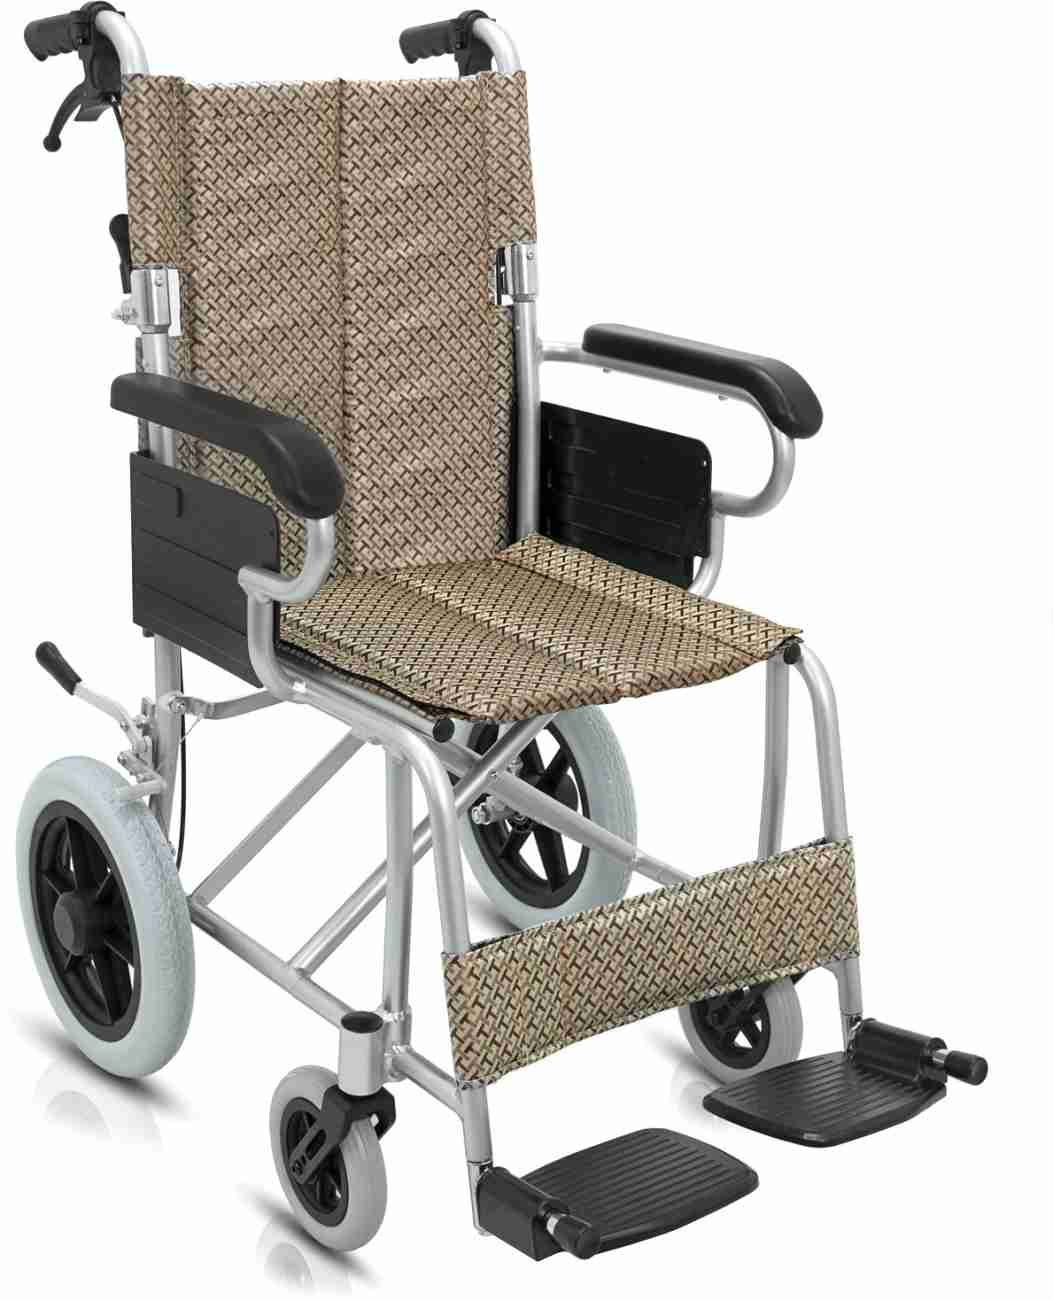 KosmoCare Folding Shower Wheelchair Online in India - Kosmochem